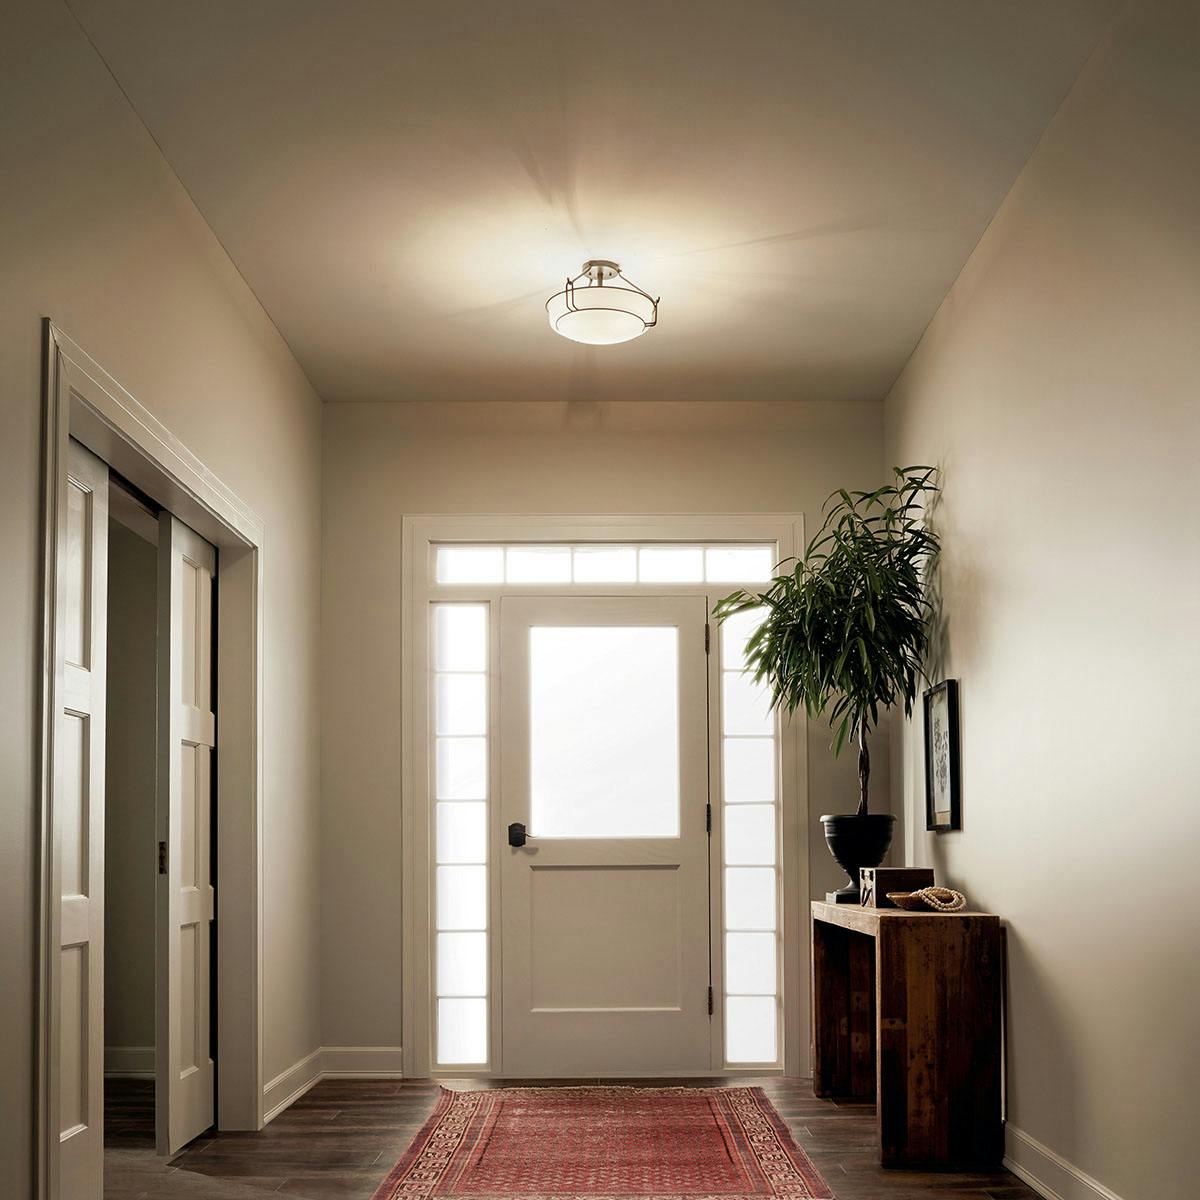 Day time Hallway image featuring Alkire flush mount light 44085OZ